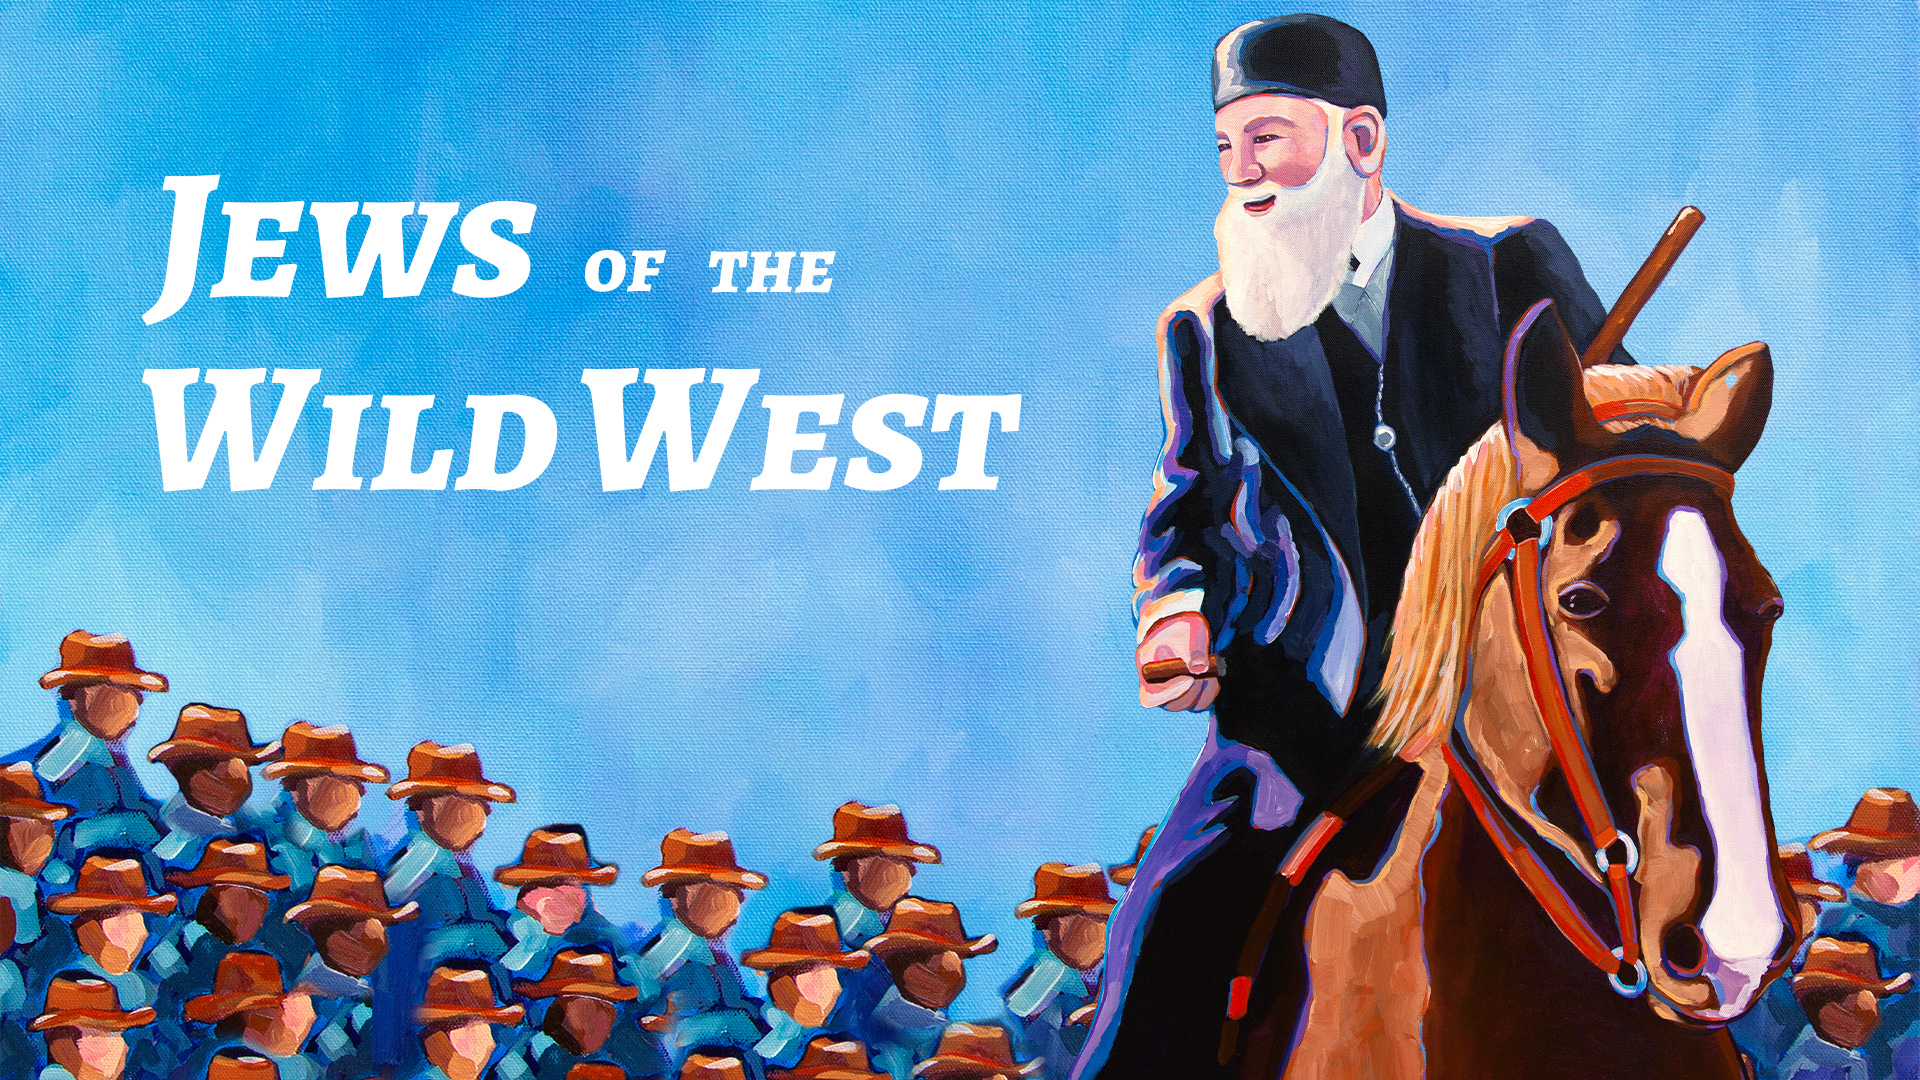 JEWS OF THE WILD WEST promo